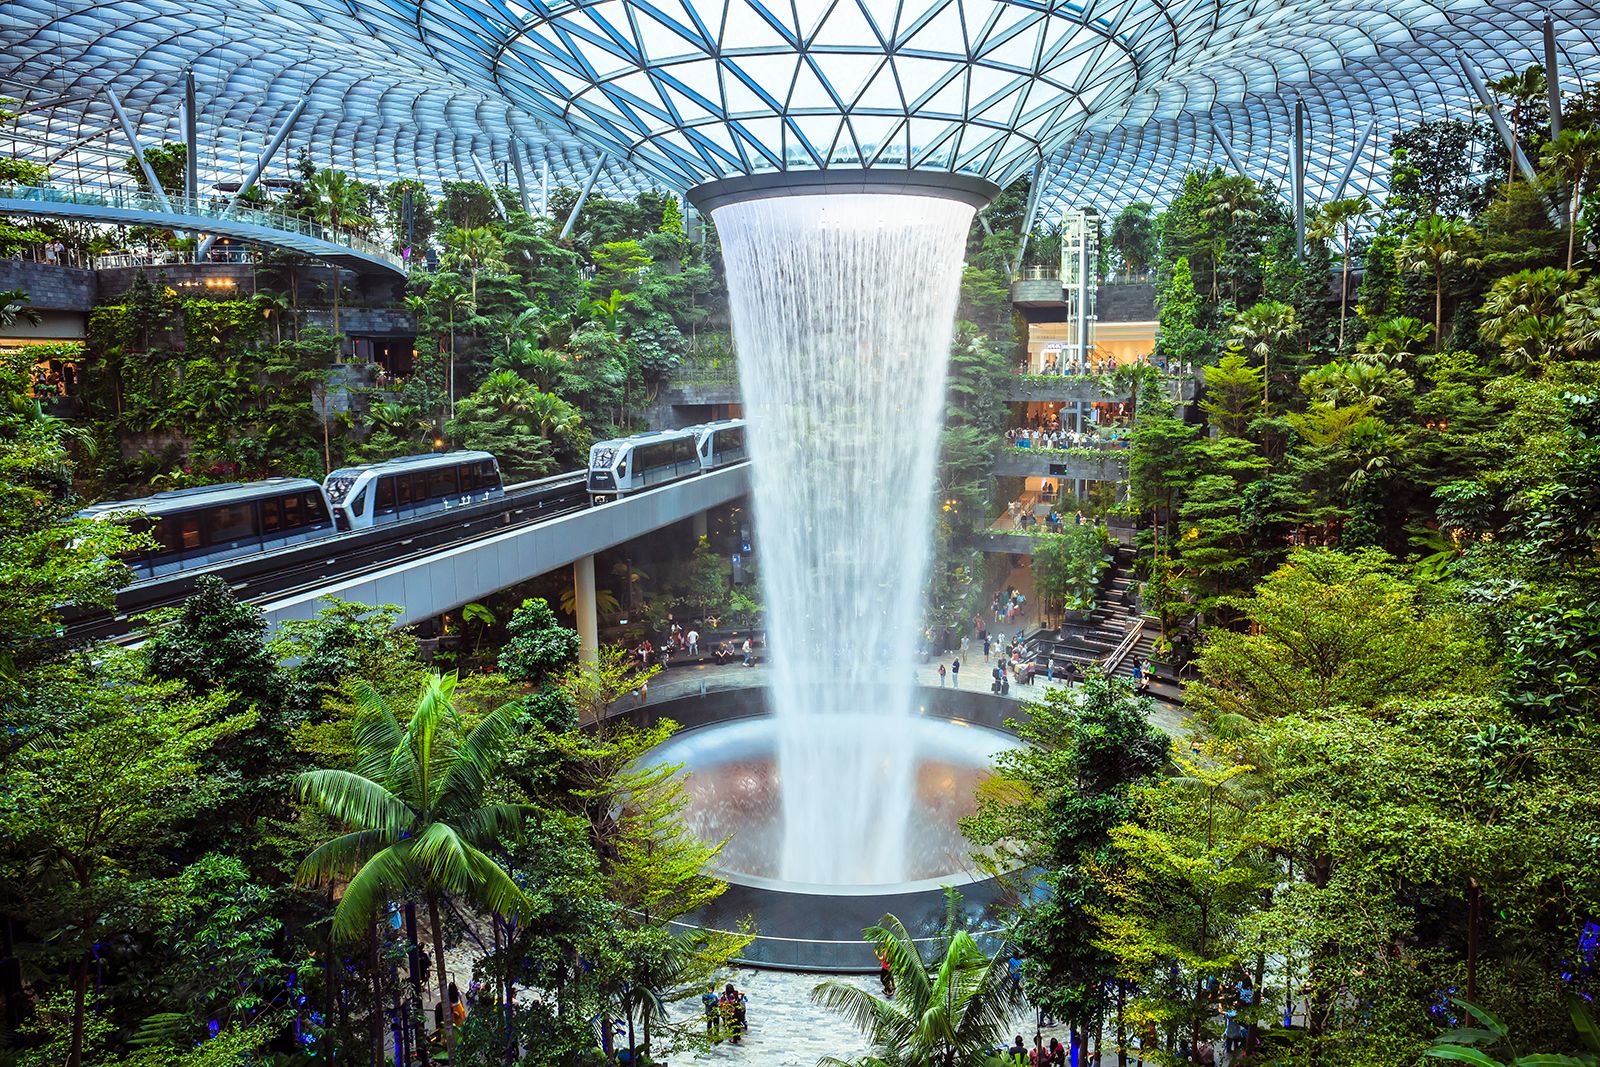 Singapore Changi Airport Terminal 3 - Walking Tour - Covid Times (4K UHD) 